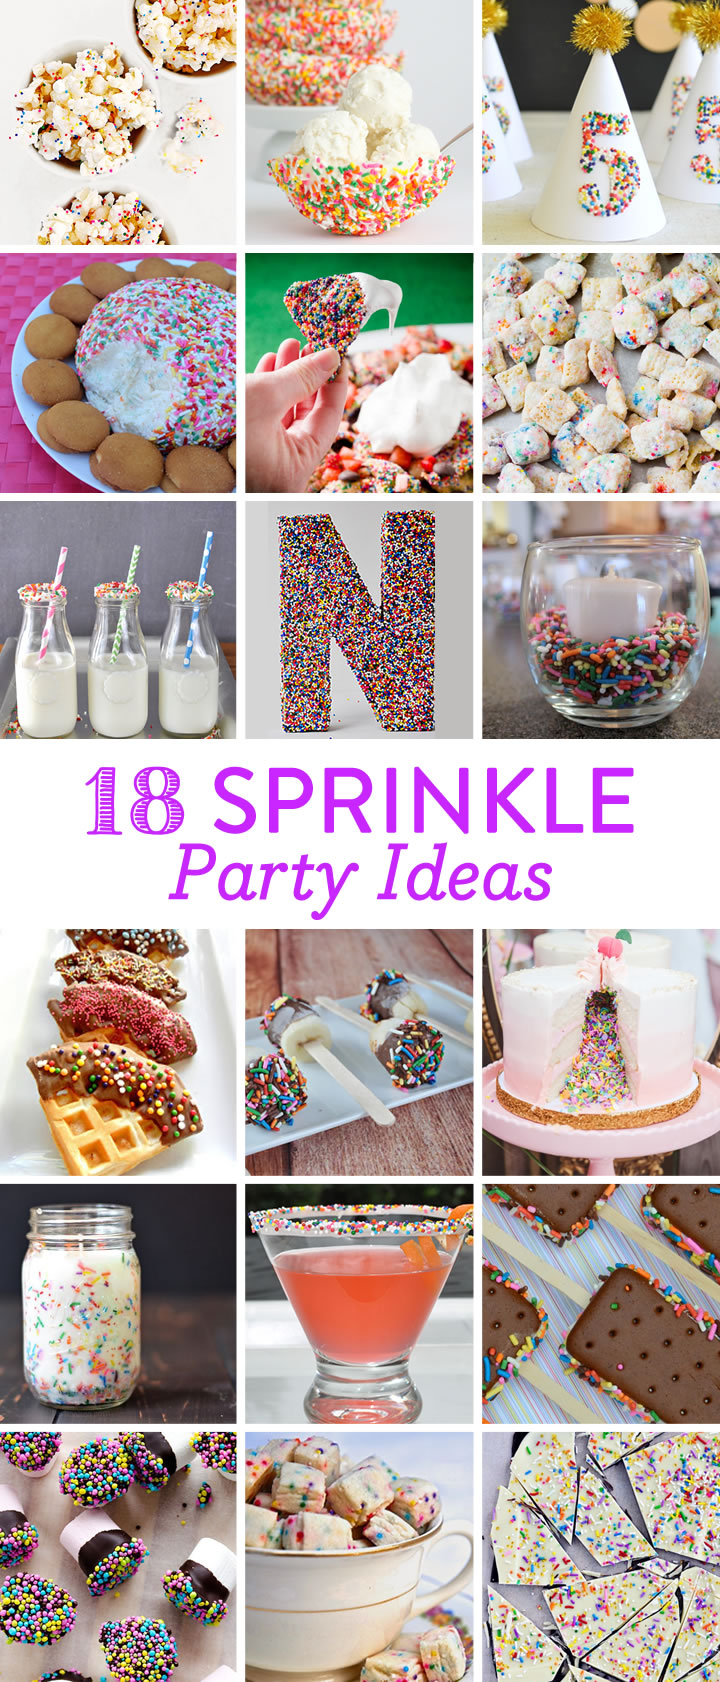 18 Sprinkle Party Ideas | Vicky Barone